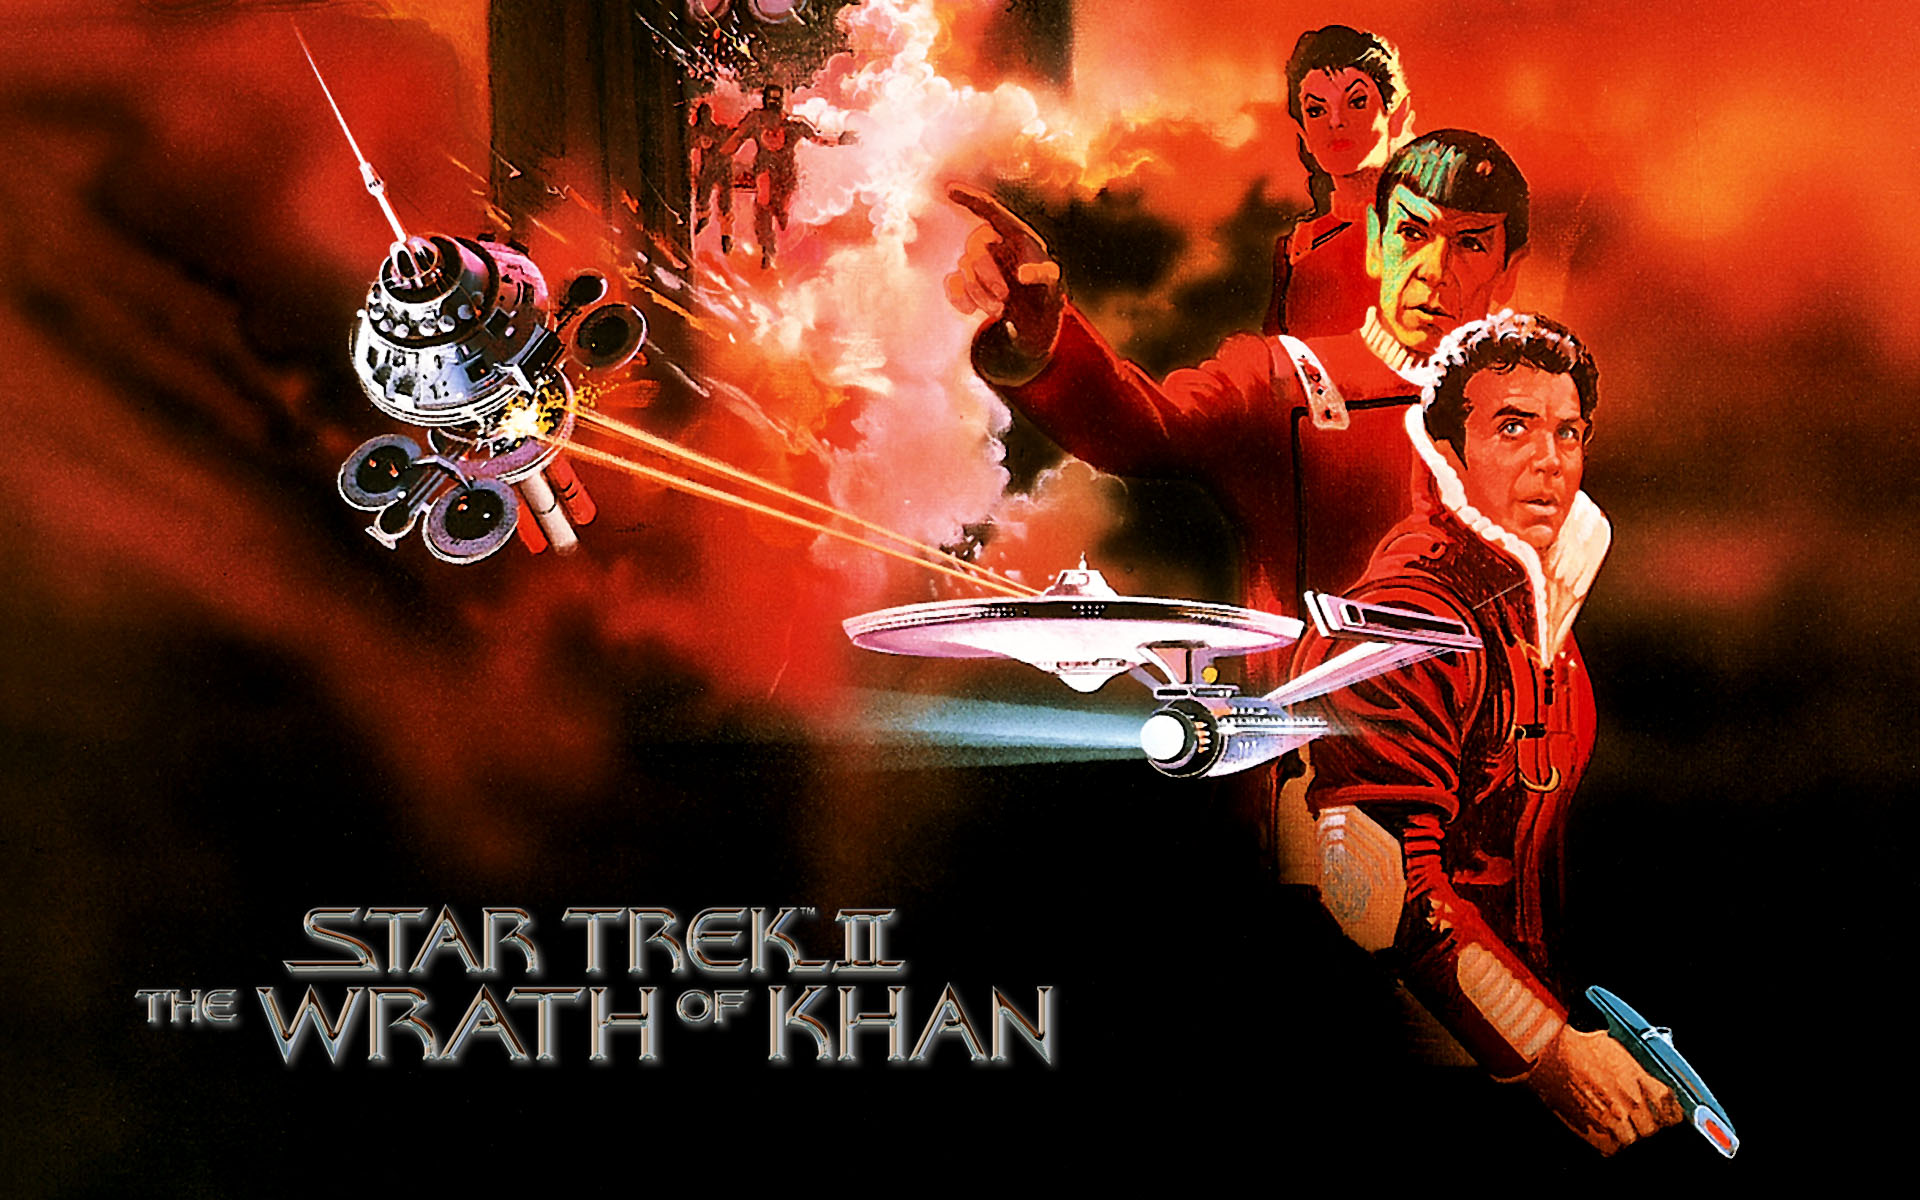 star trek movie after wrath of khan